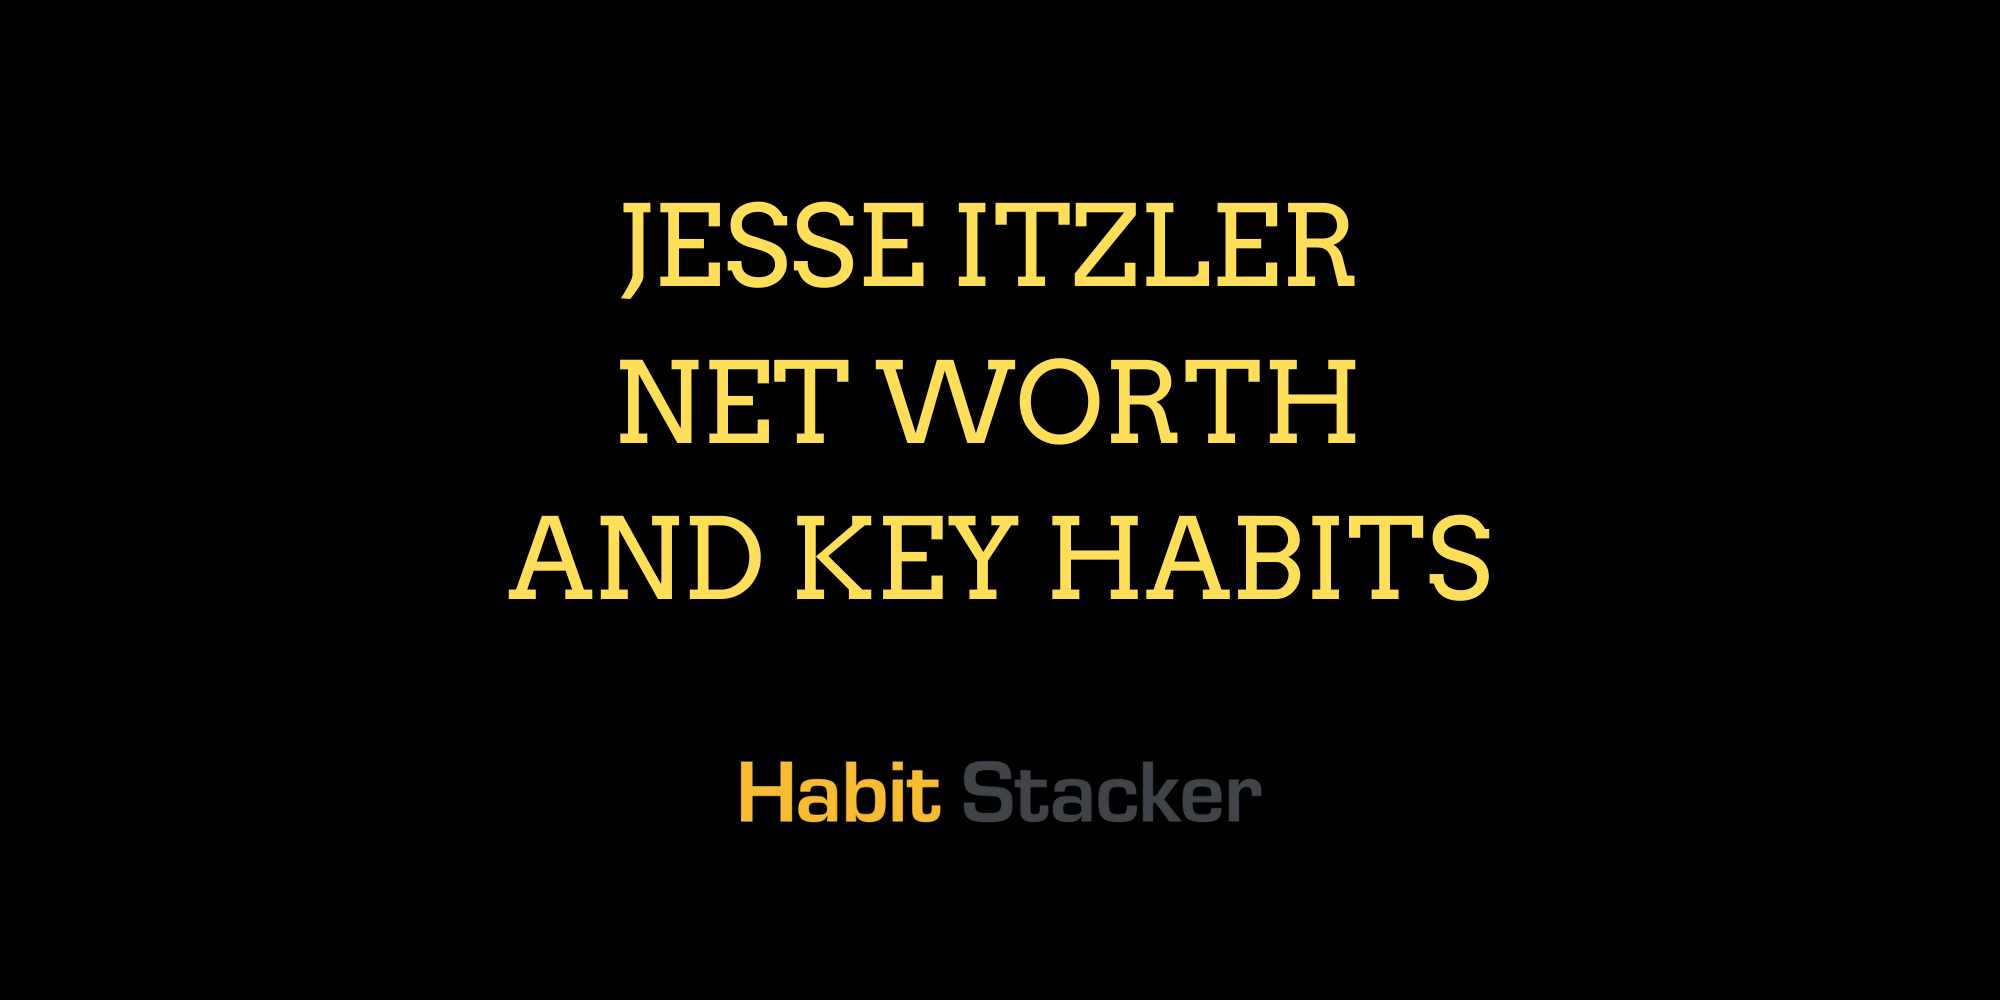 Jesse Itzler Net Worth and Key Habits